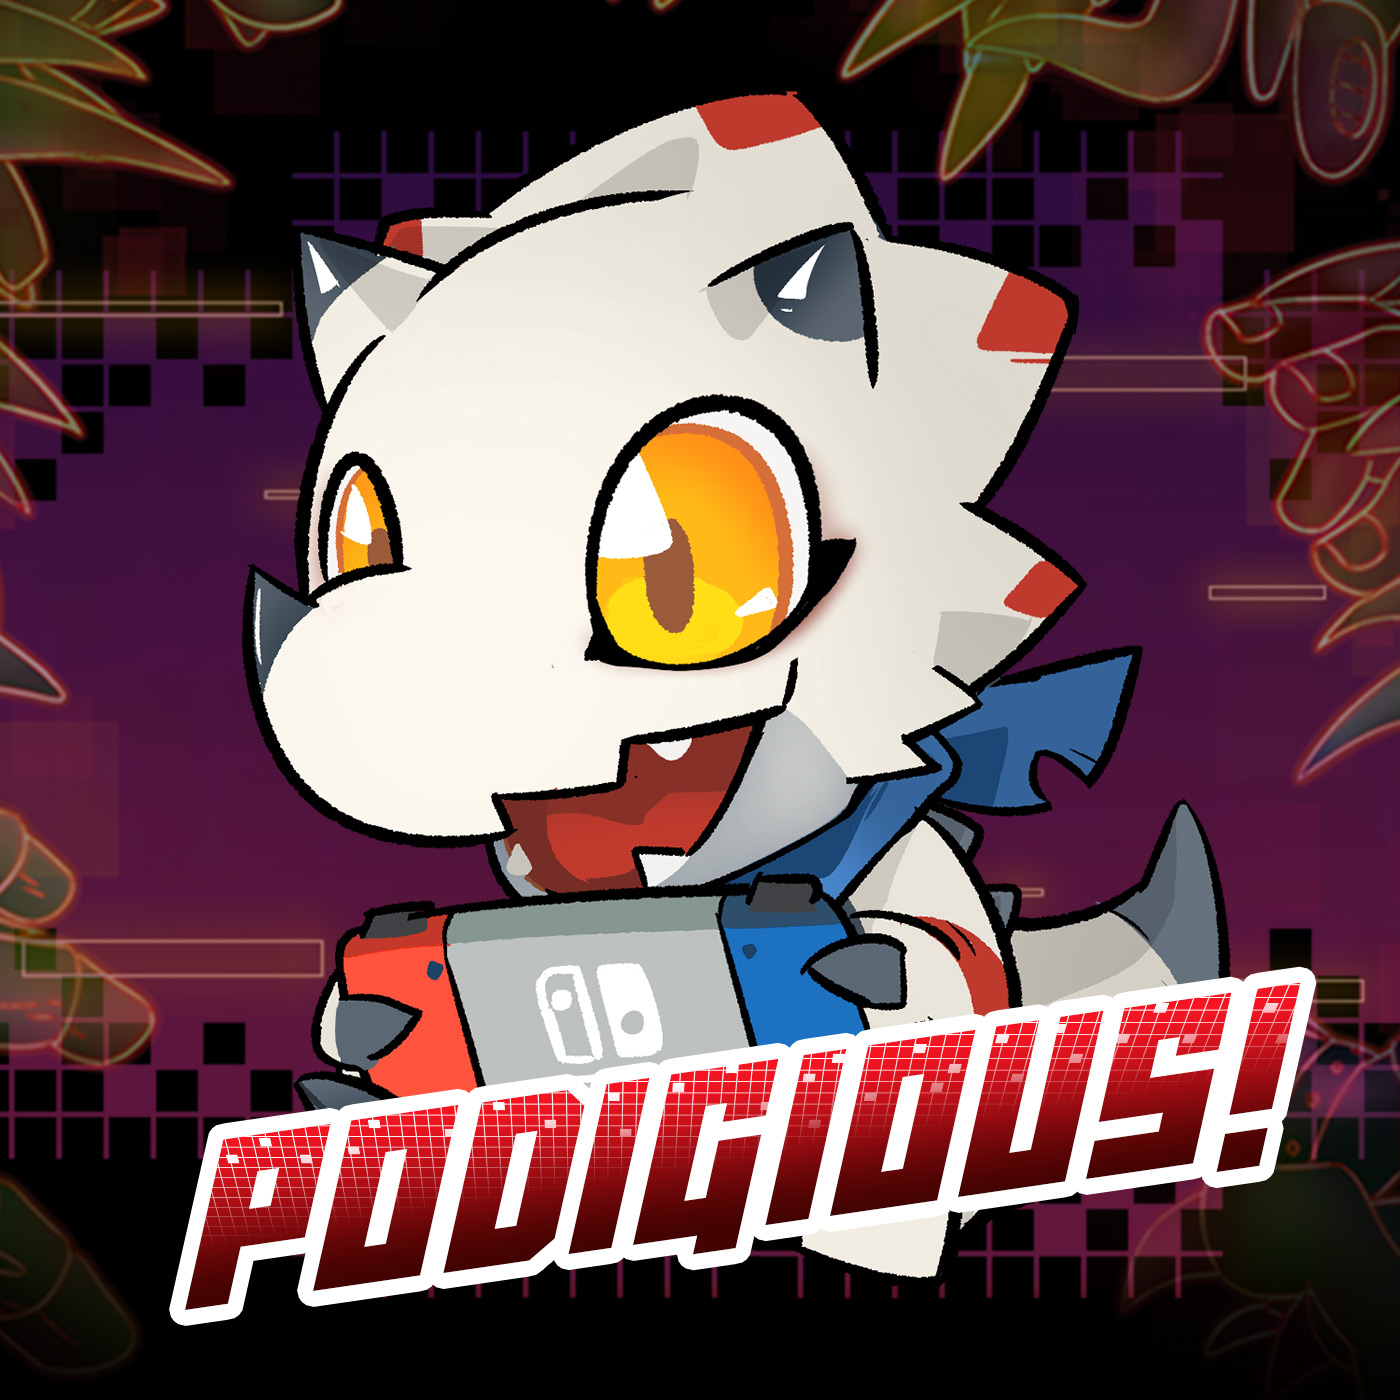 Podigious: A Digimon Adventure 2020 Podcast podcast